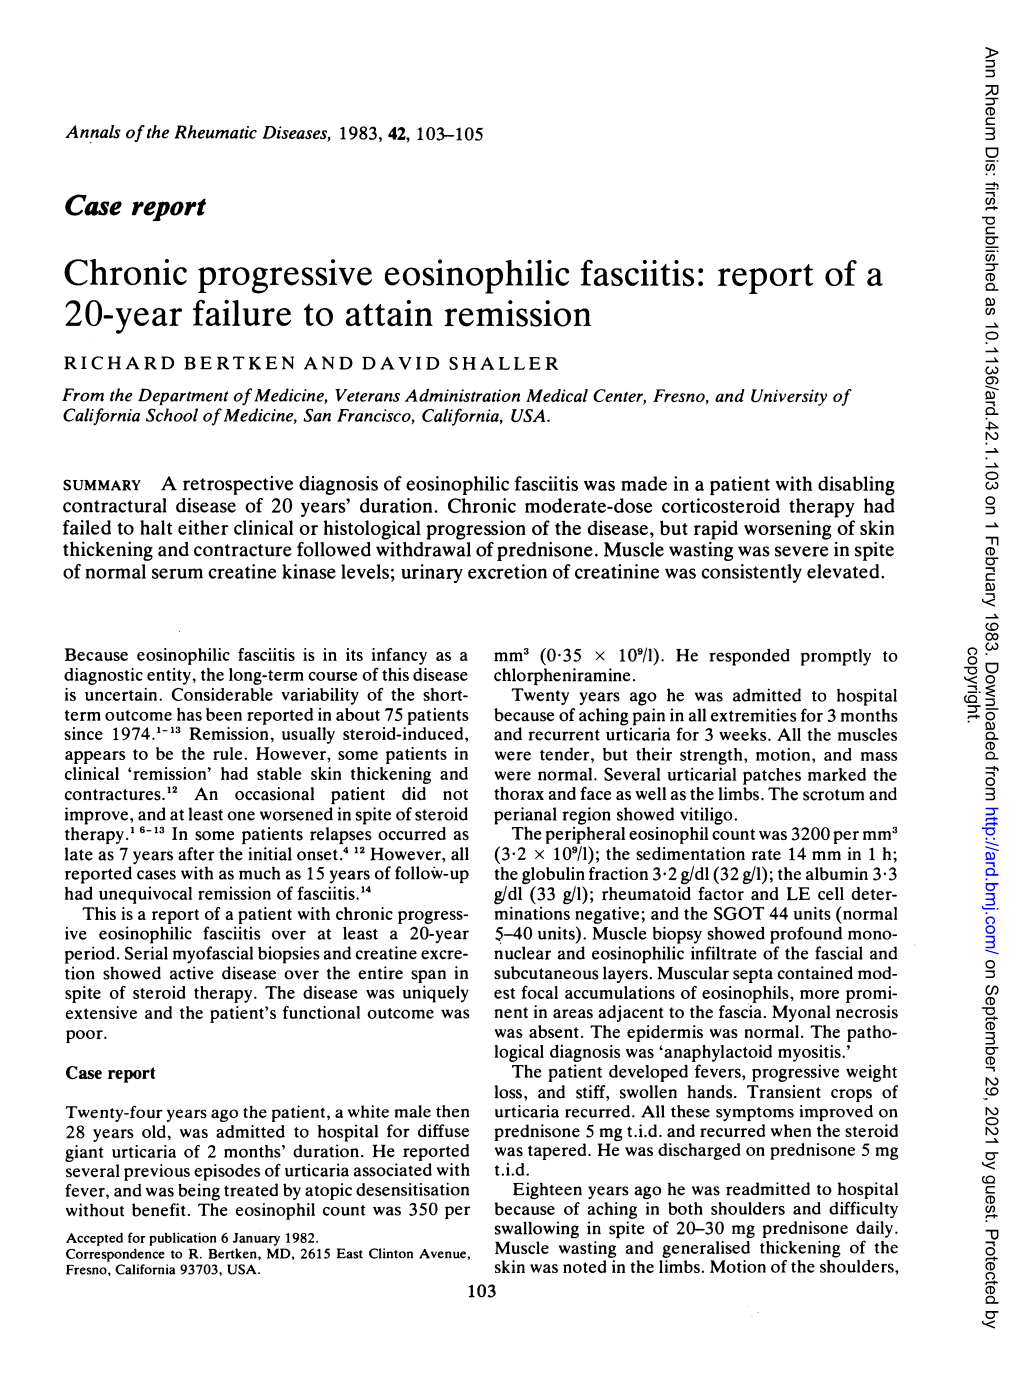 Chronic Progressive Eosinophilic Fasciitis: Report of a 20-Year Failure